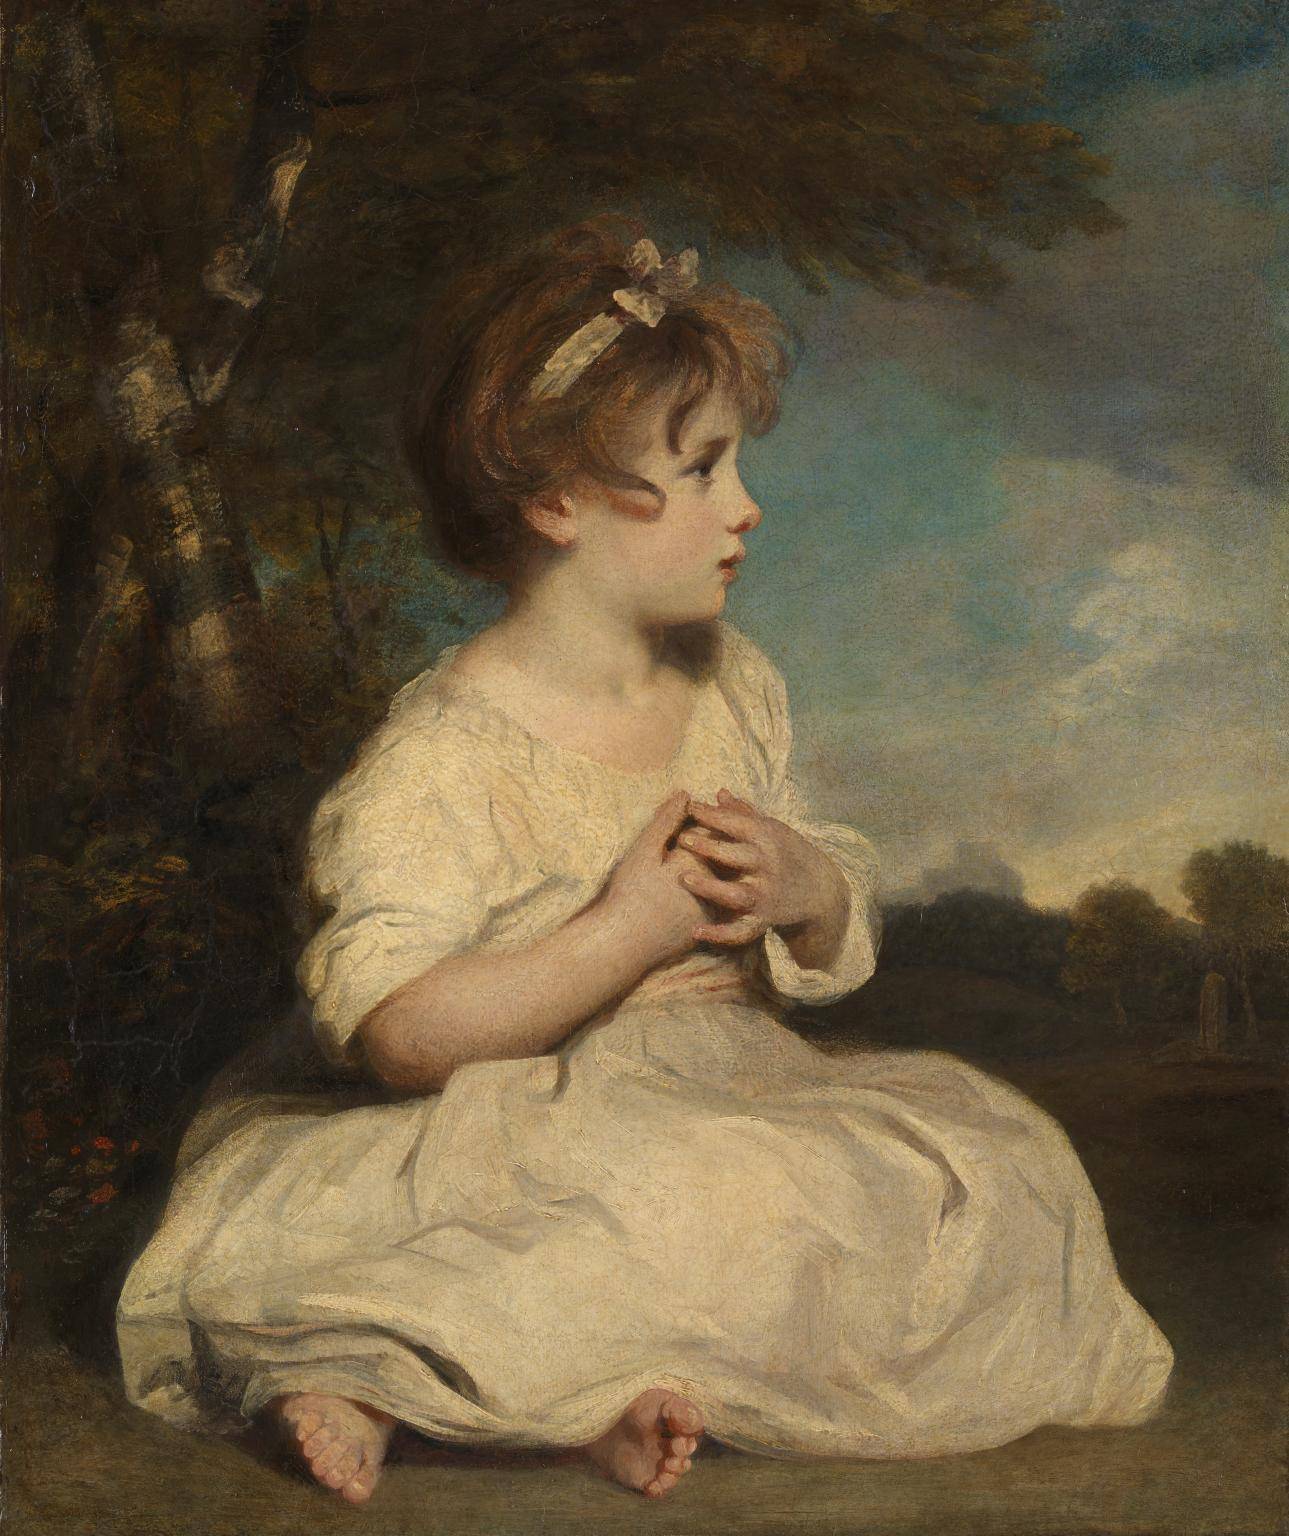 Joshua Reynolds (1785- 1788)